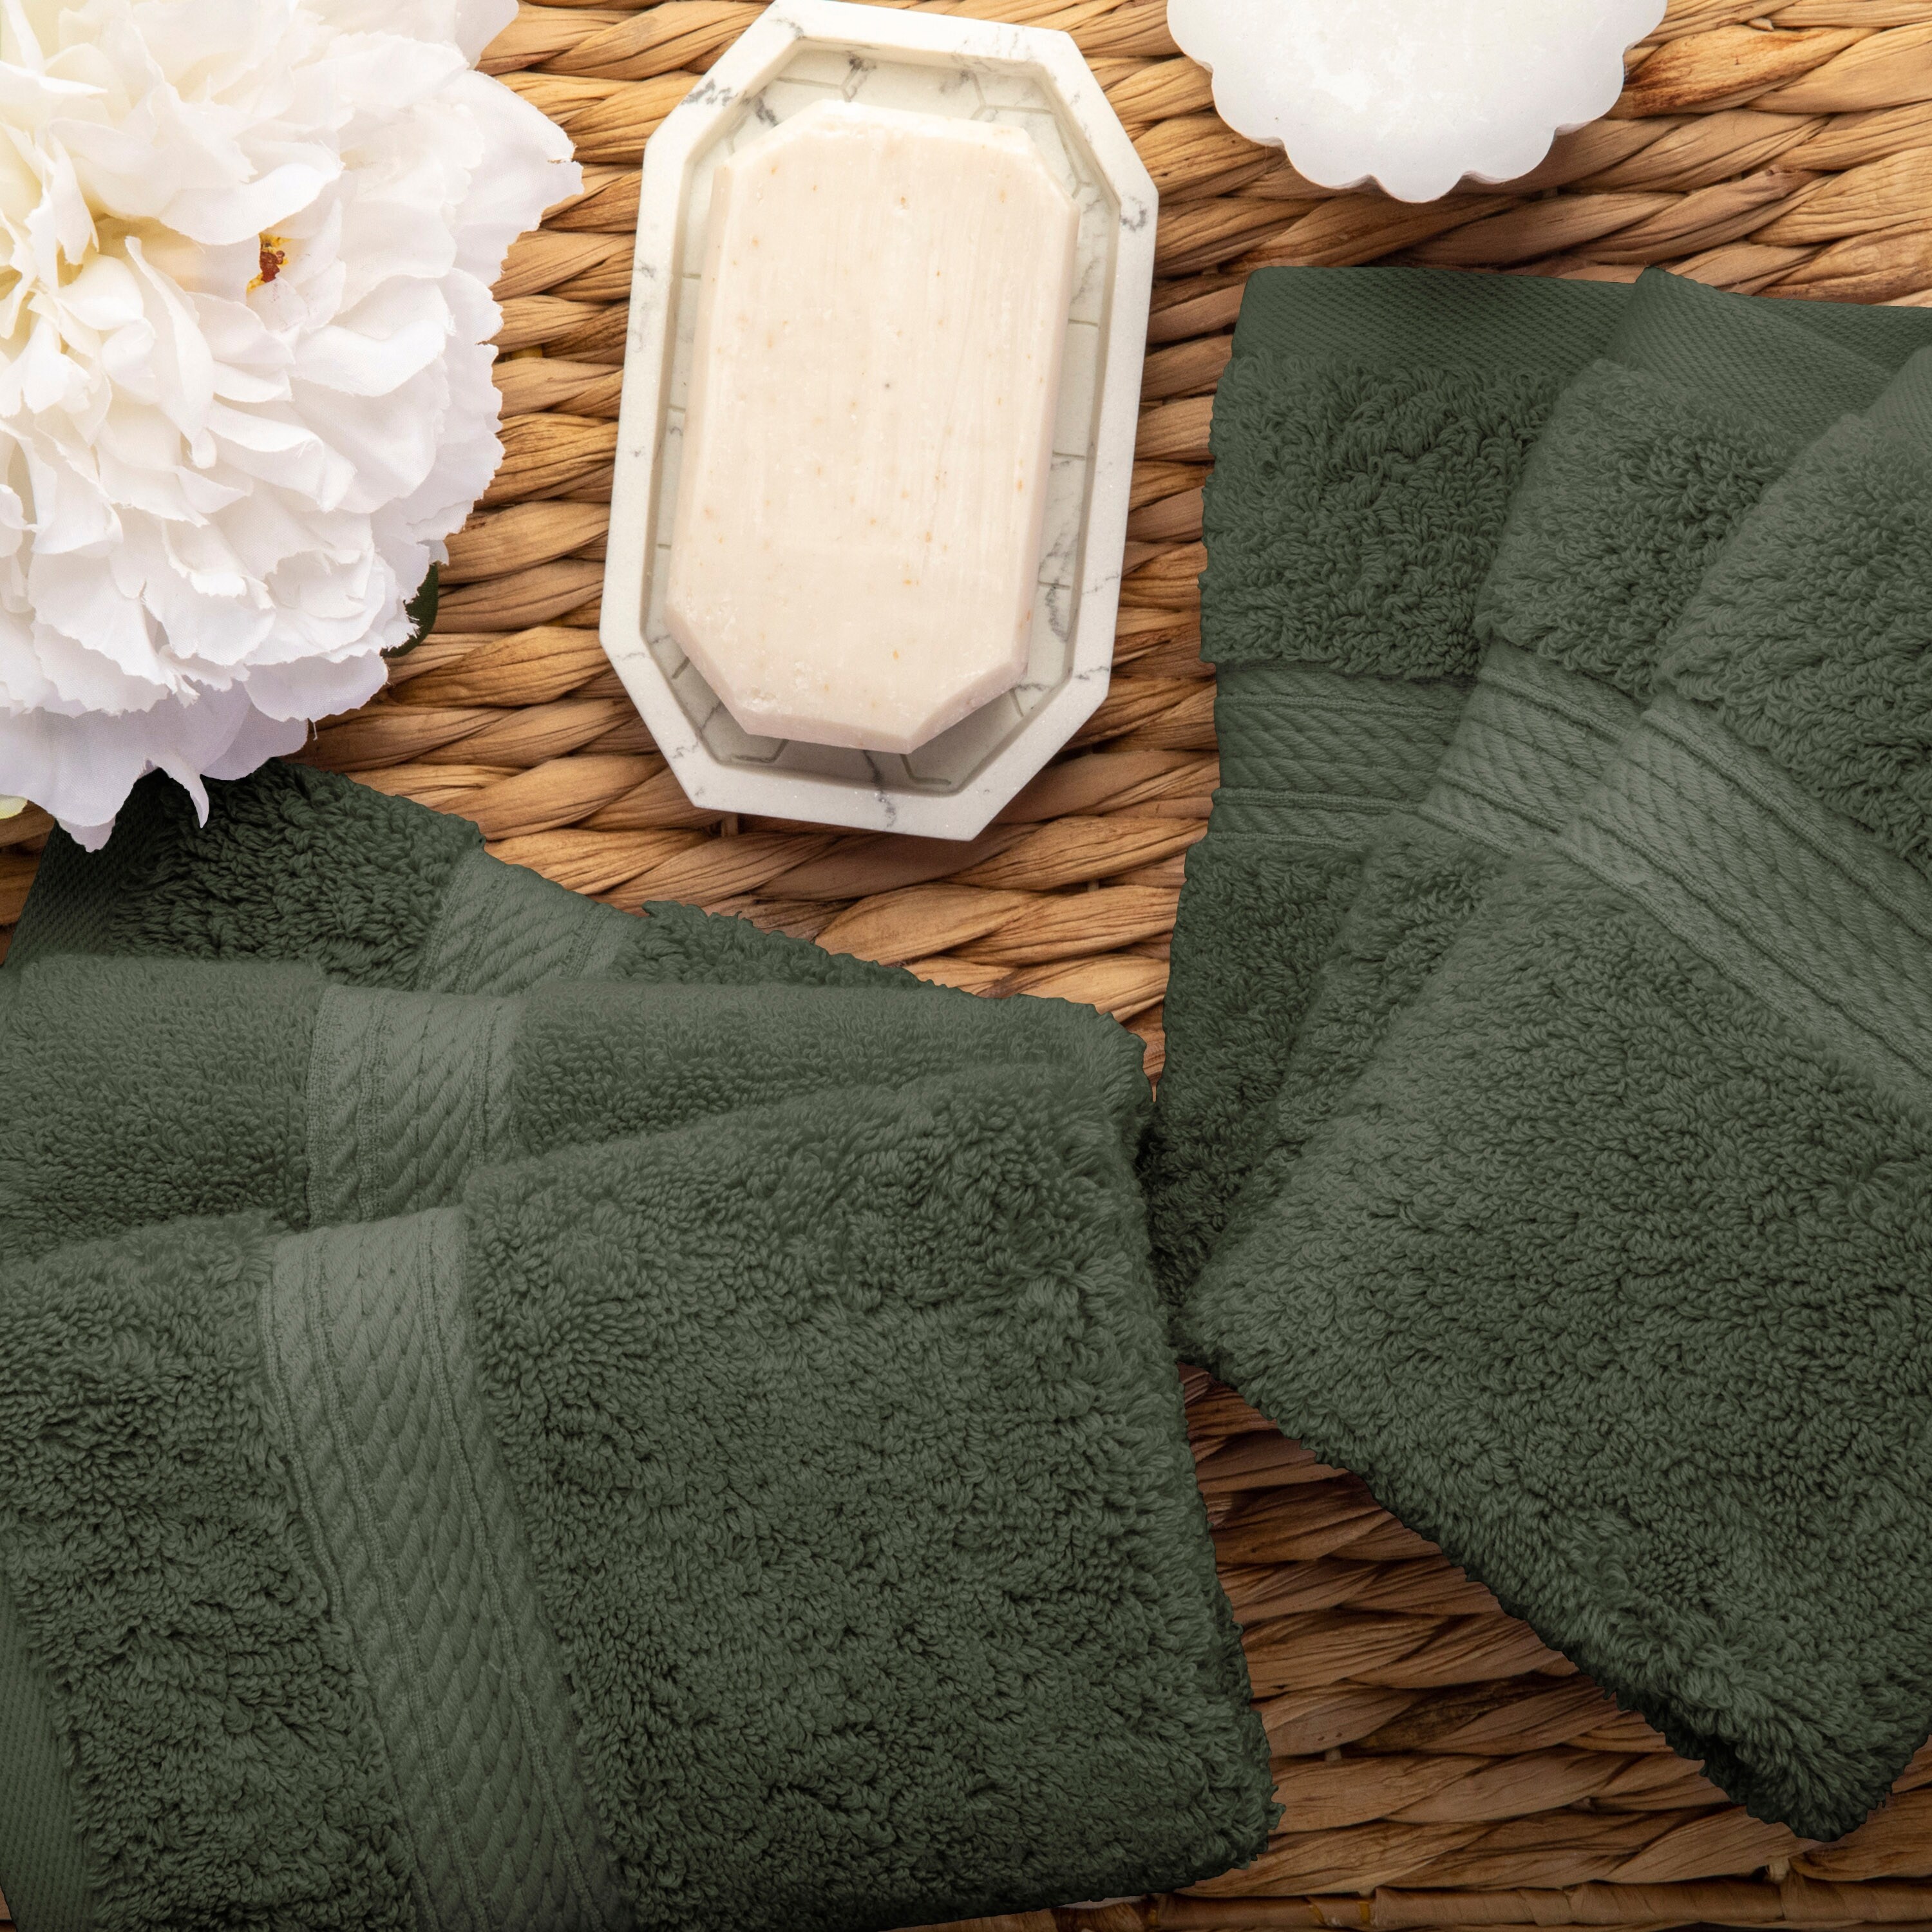 Superior Egyptian Cotton Medium Weight Washcloth Towel Set of 10 - On Sale  - Bed Bath & Beyond - 3450471